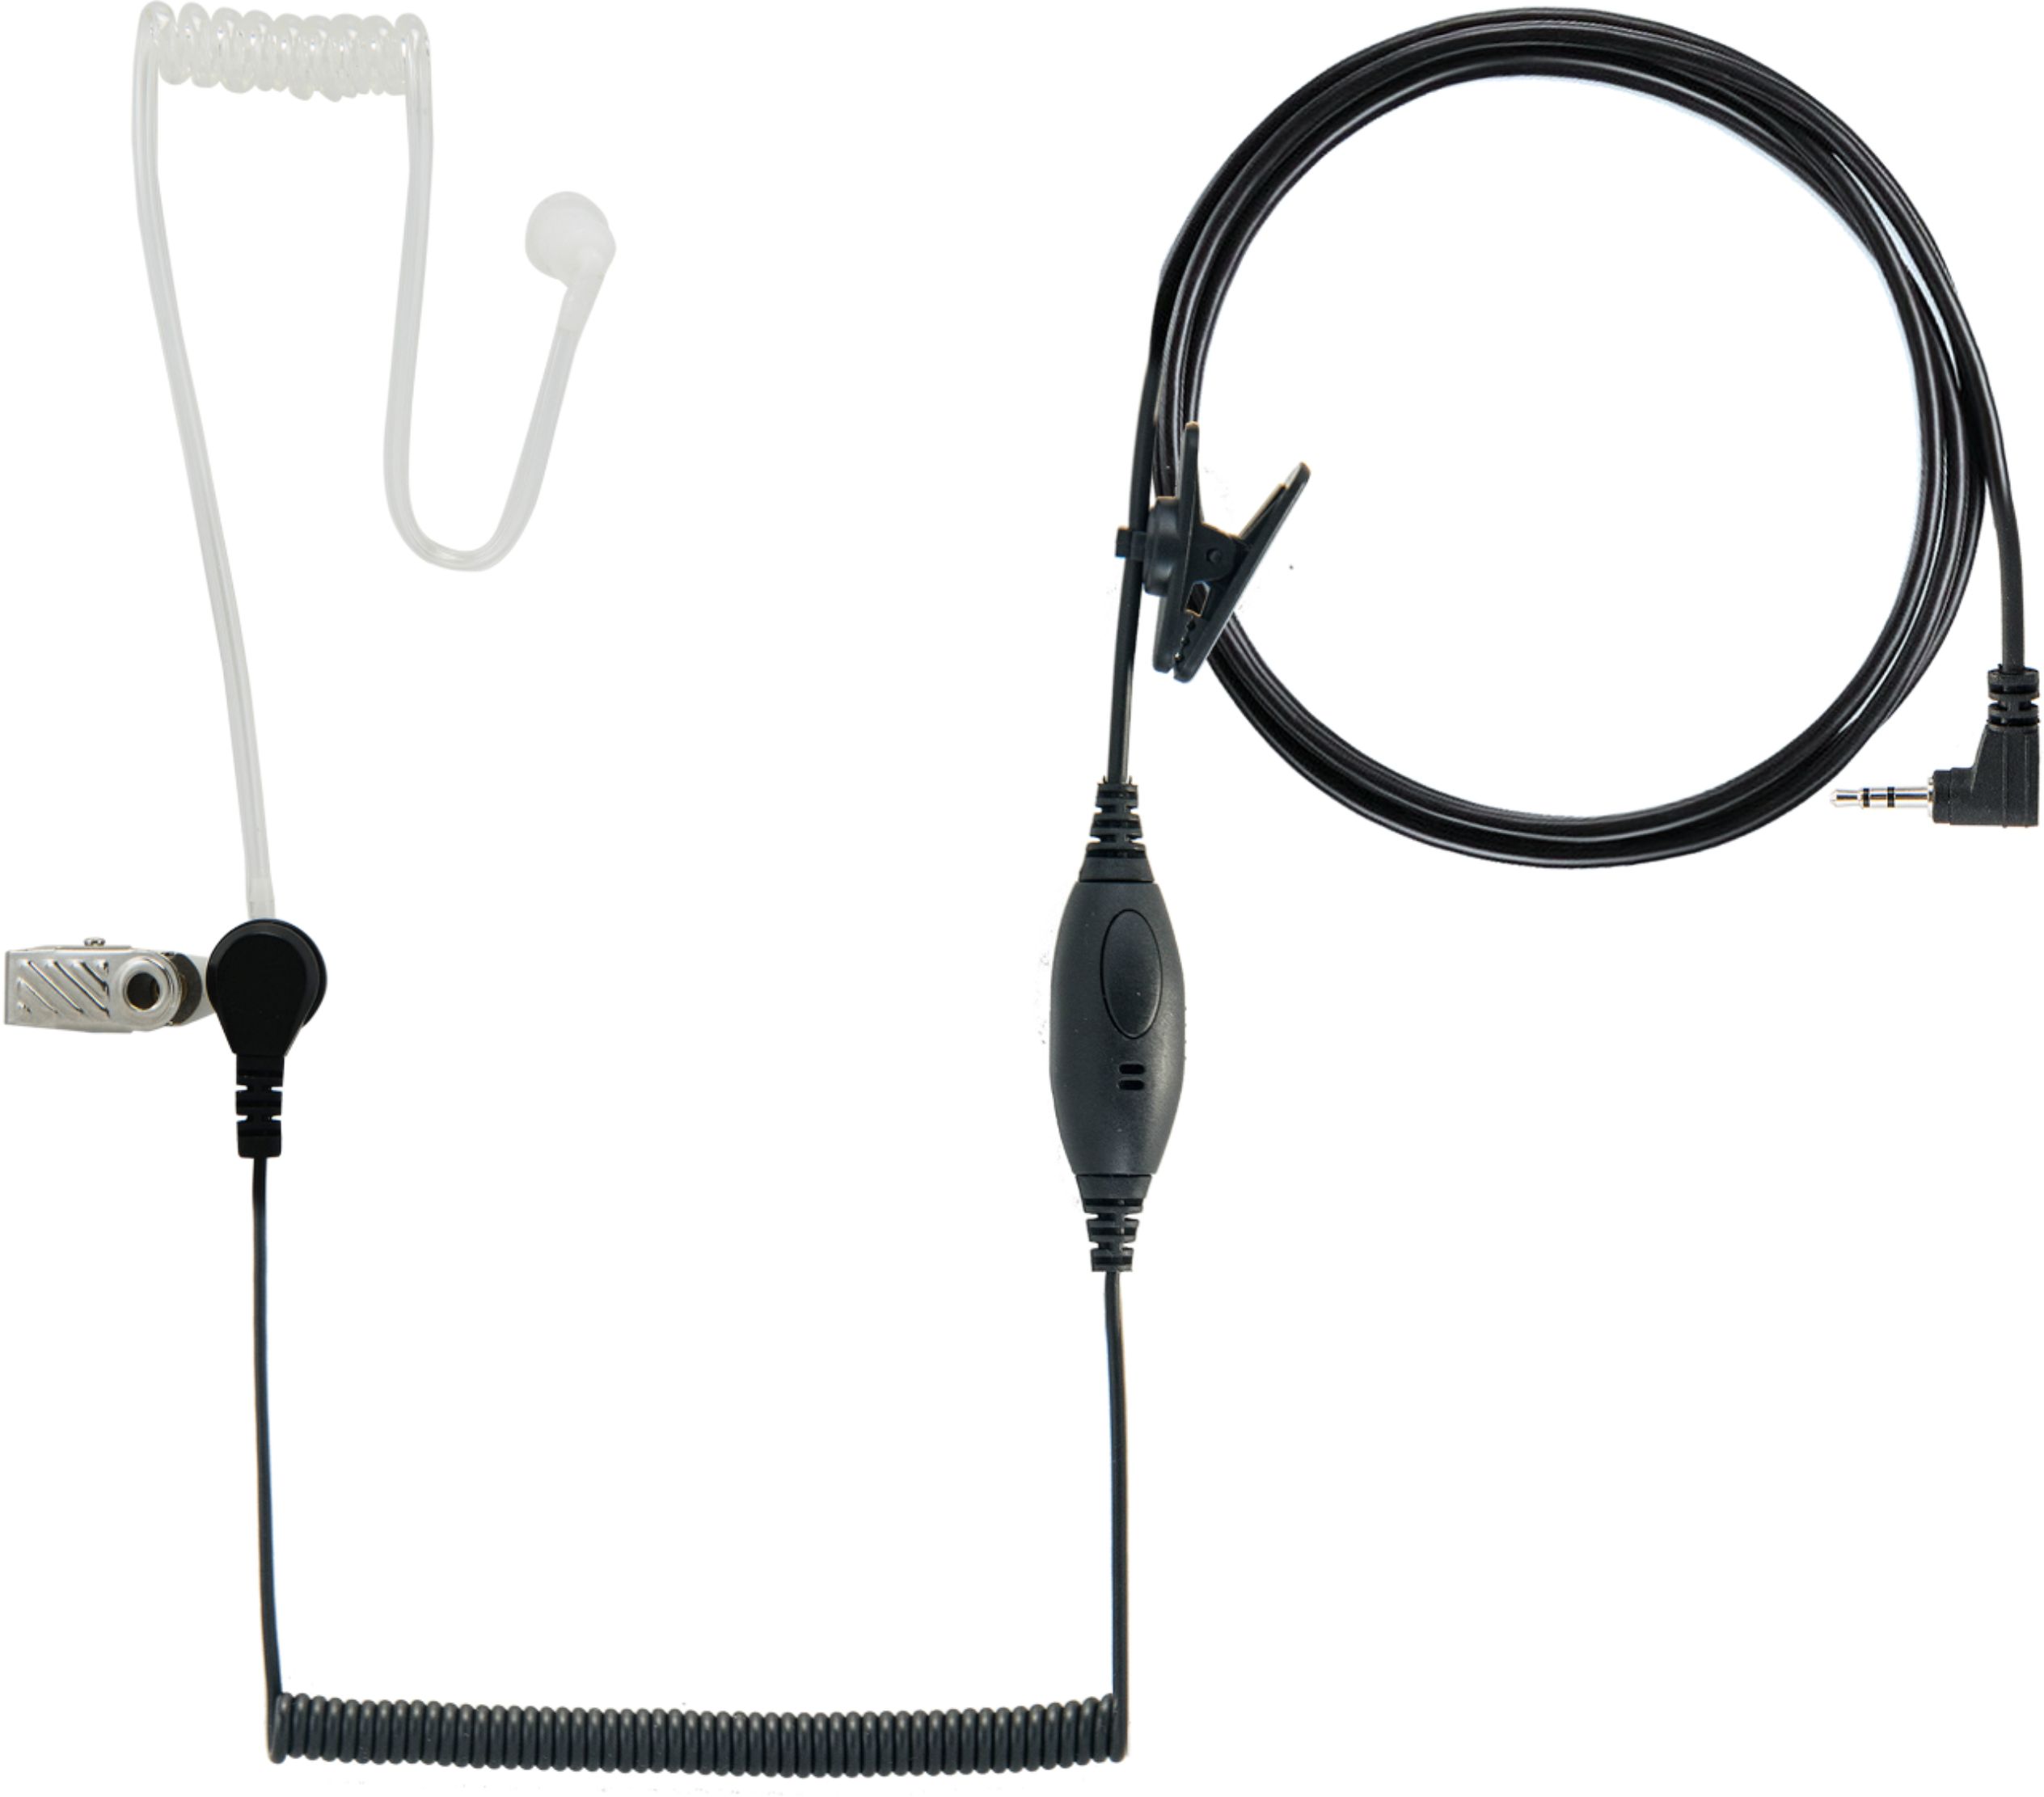 Angle View: Midland - BizTalk™ Hands-Free Headset - Black